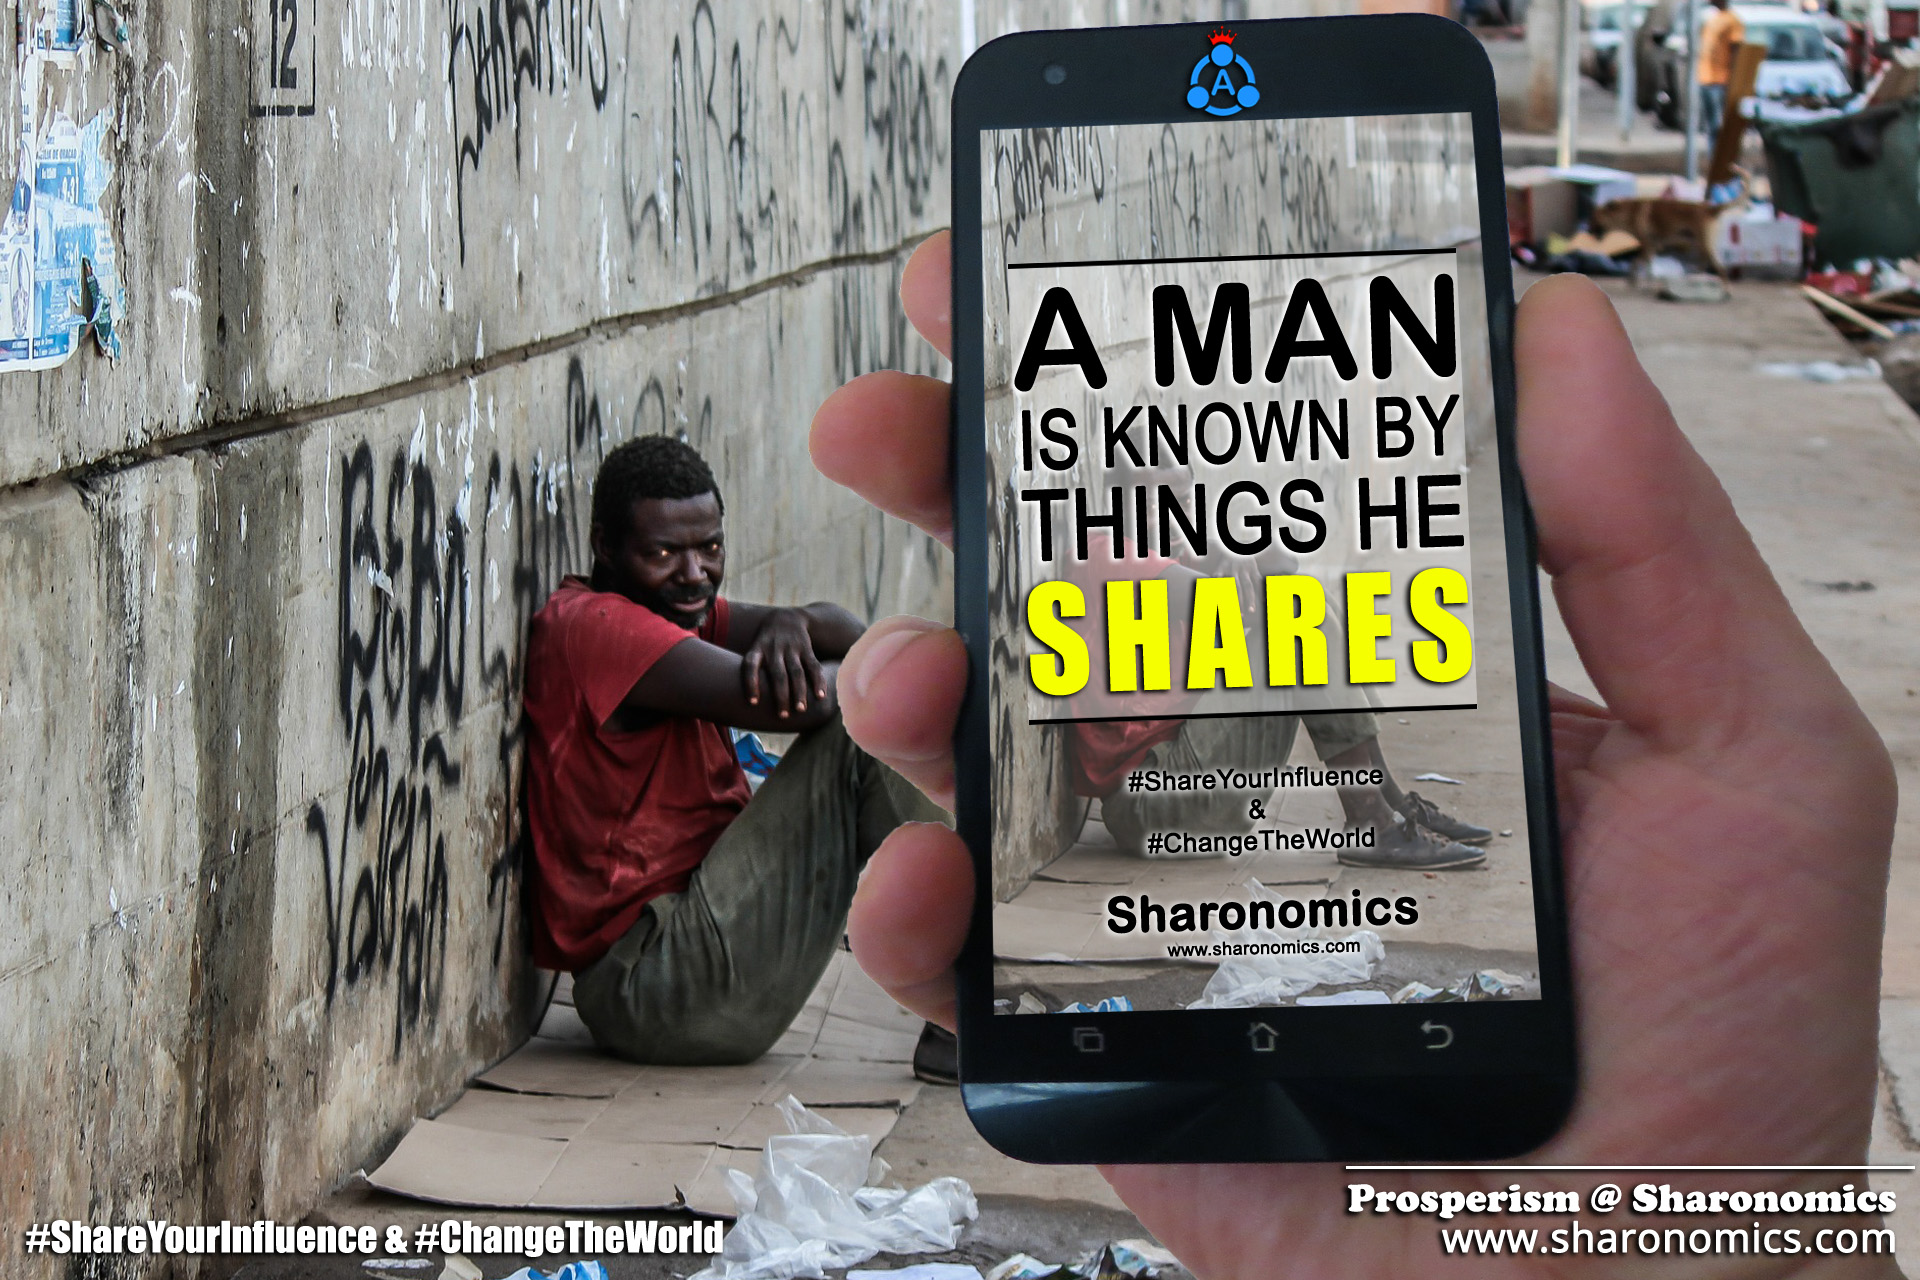 sharonomics, algoshare, prosperism, autonio, poverty, charity, #shareyourinfluence, #changetheworld, man, things, share, know, known